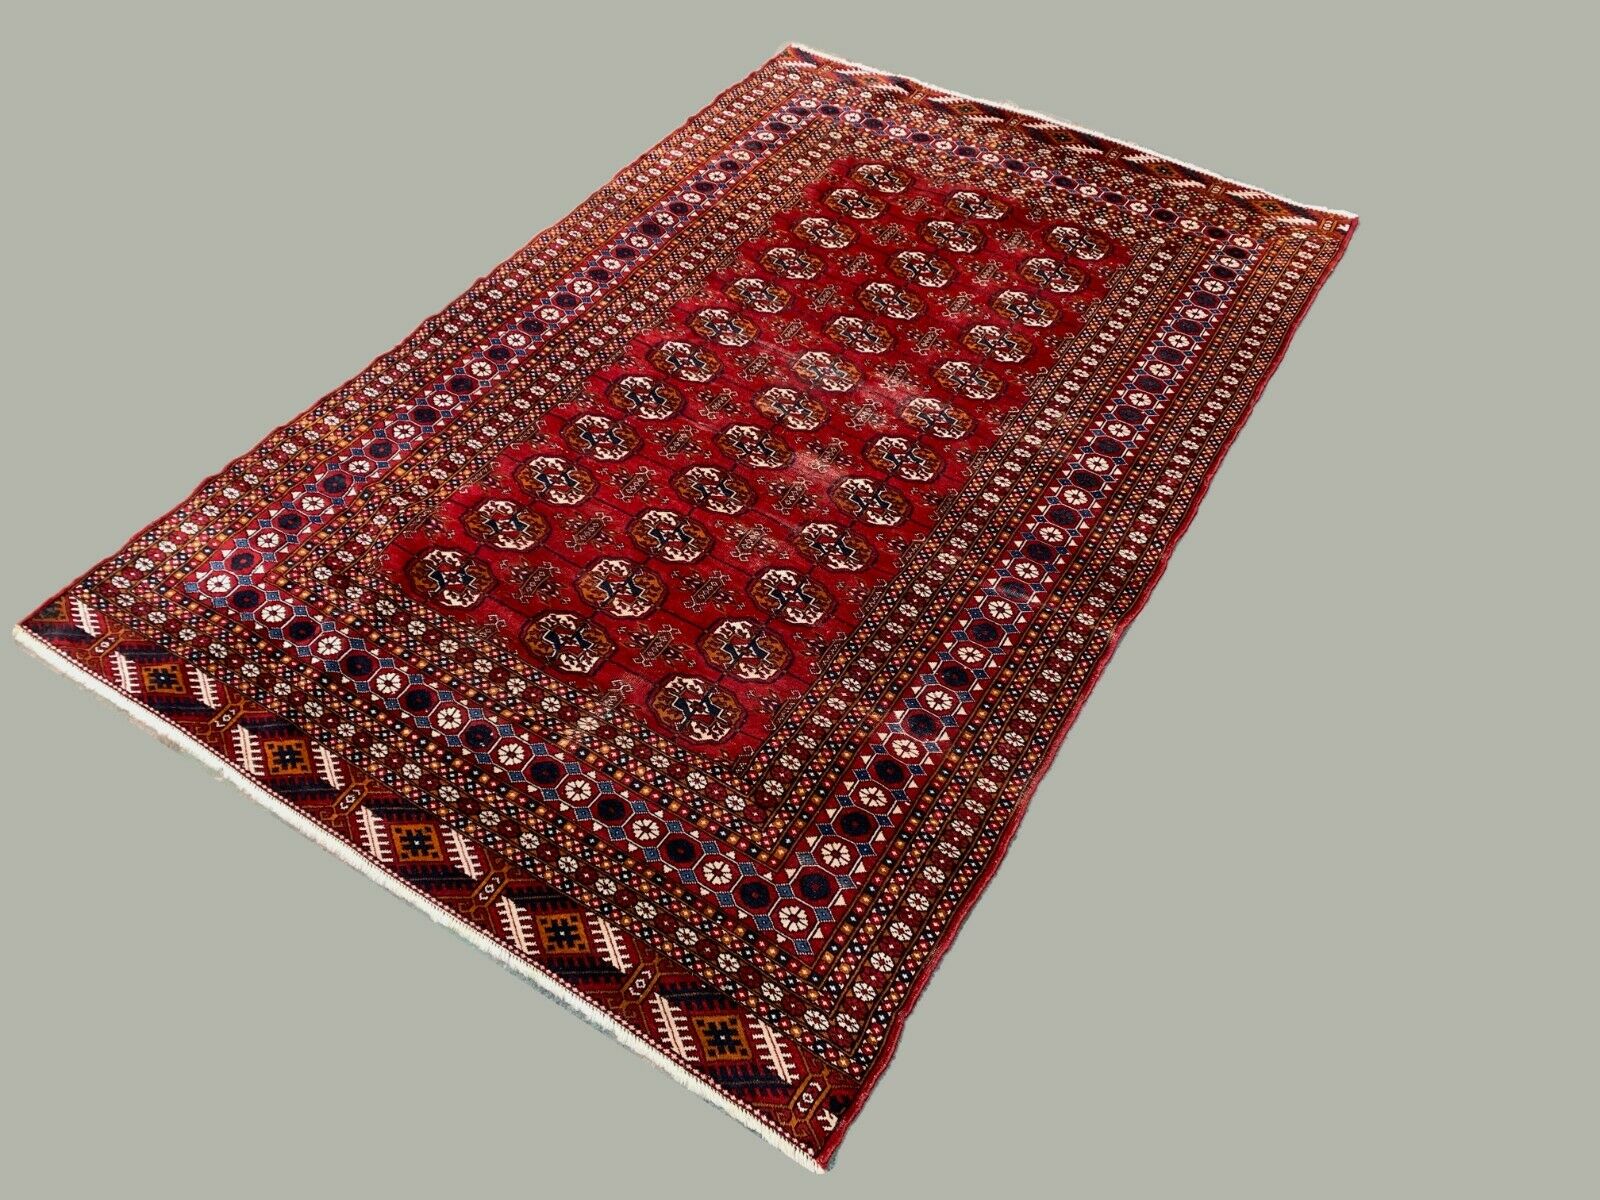 Antique Turkmen Yomut Rug, 192x125 cm Turkoman Bokhara Red Black Beige